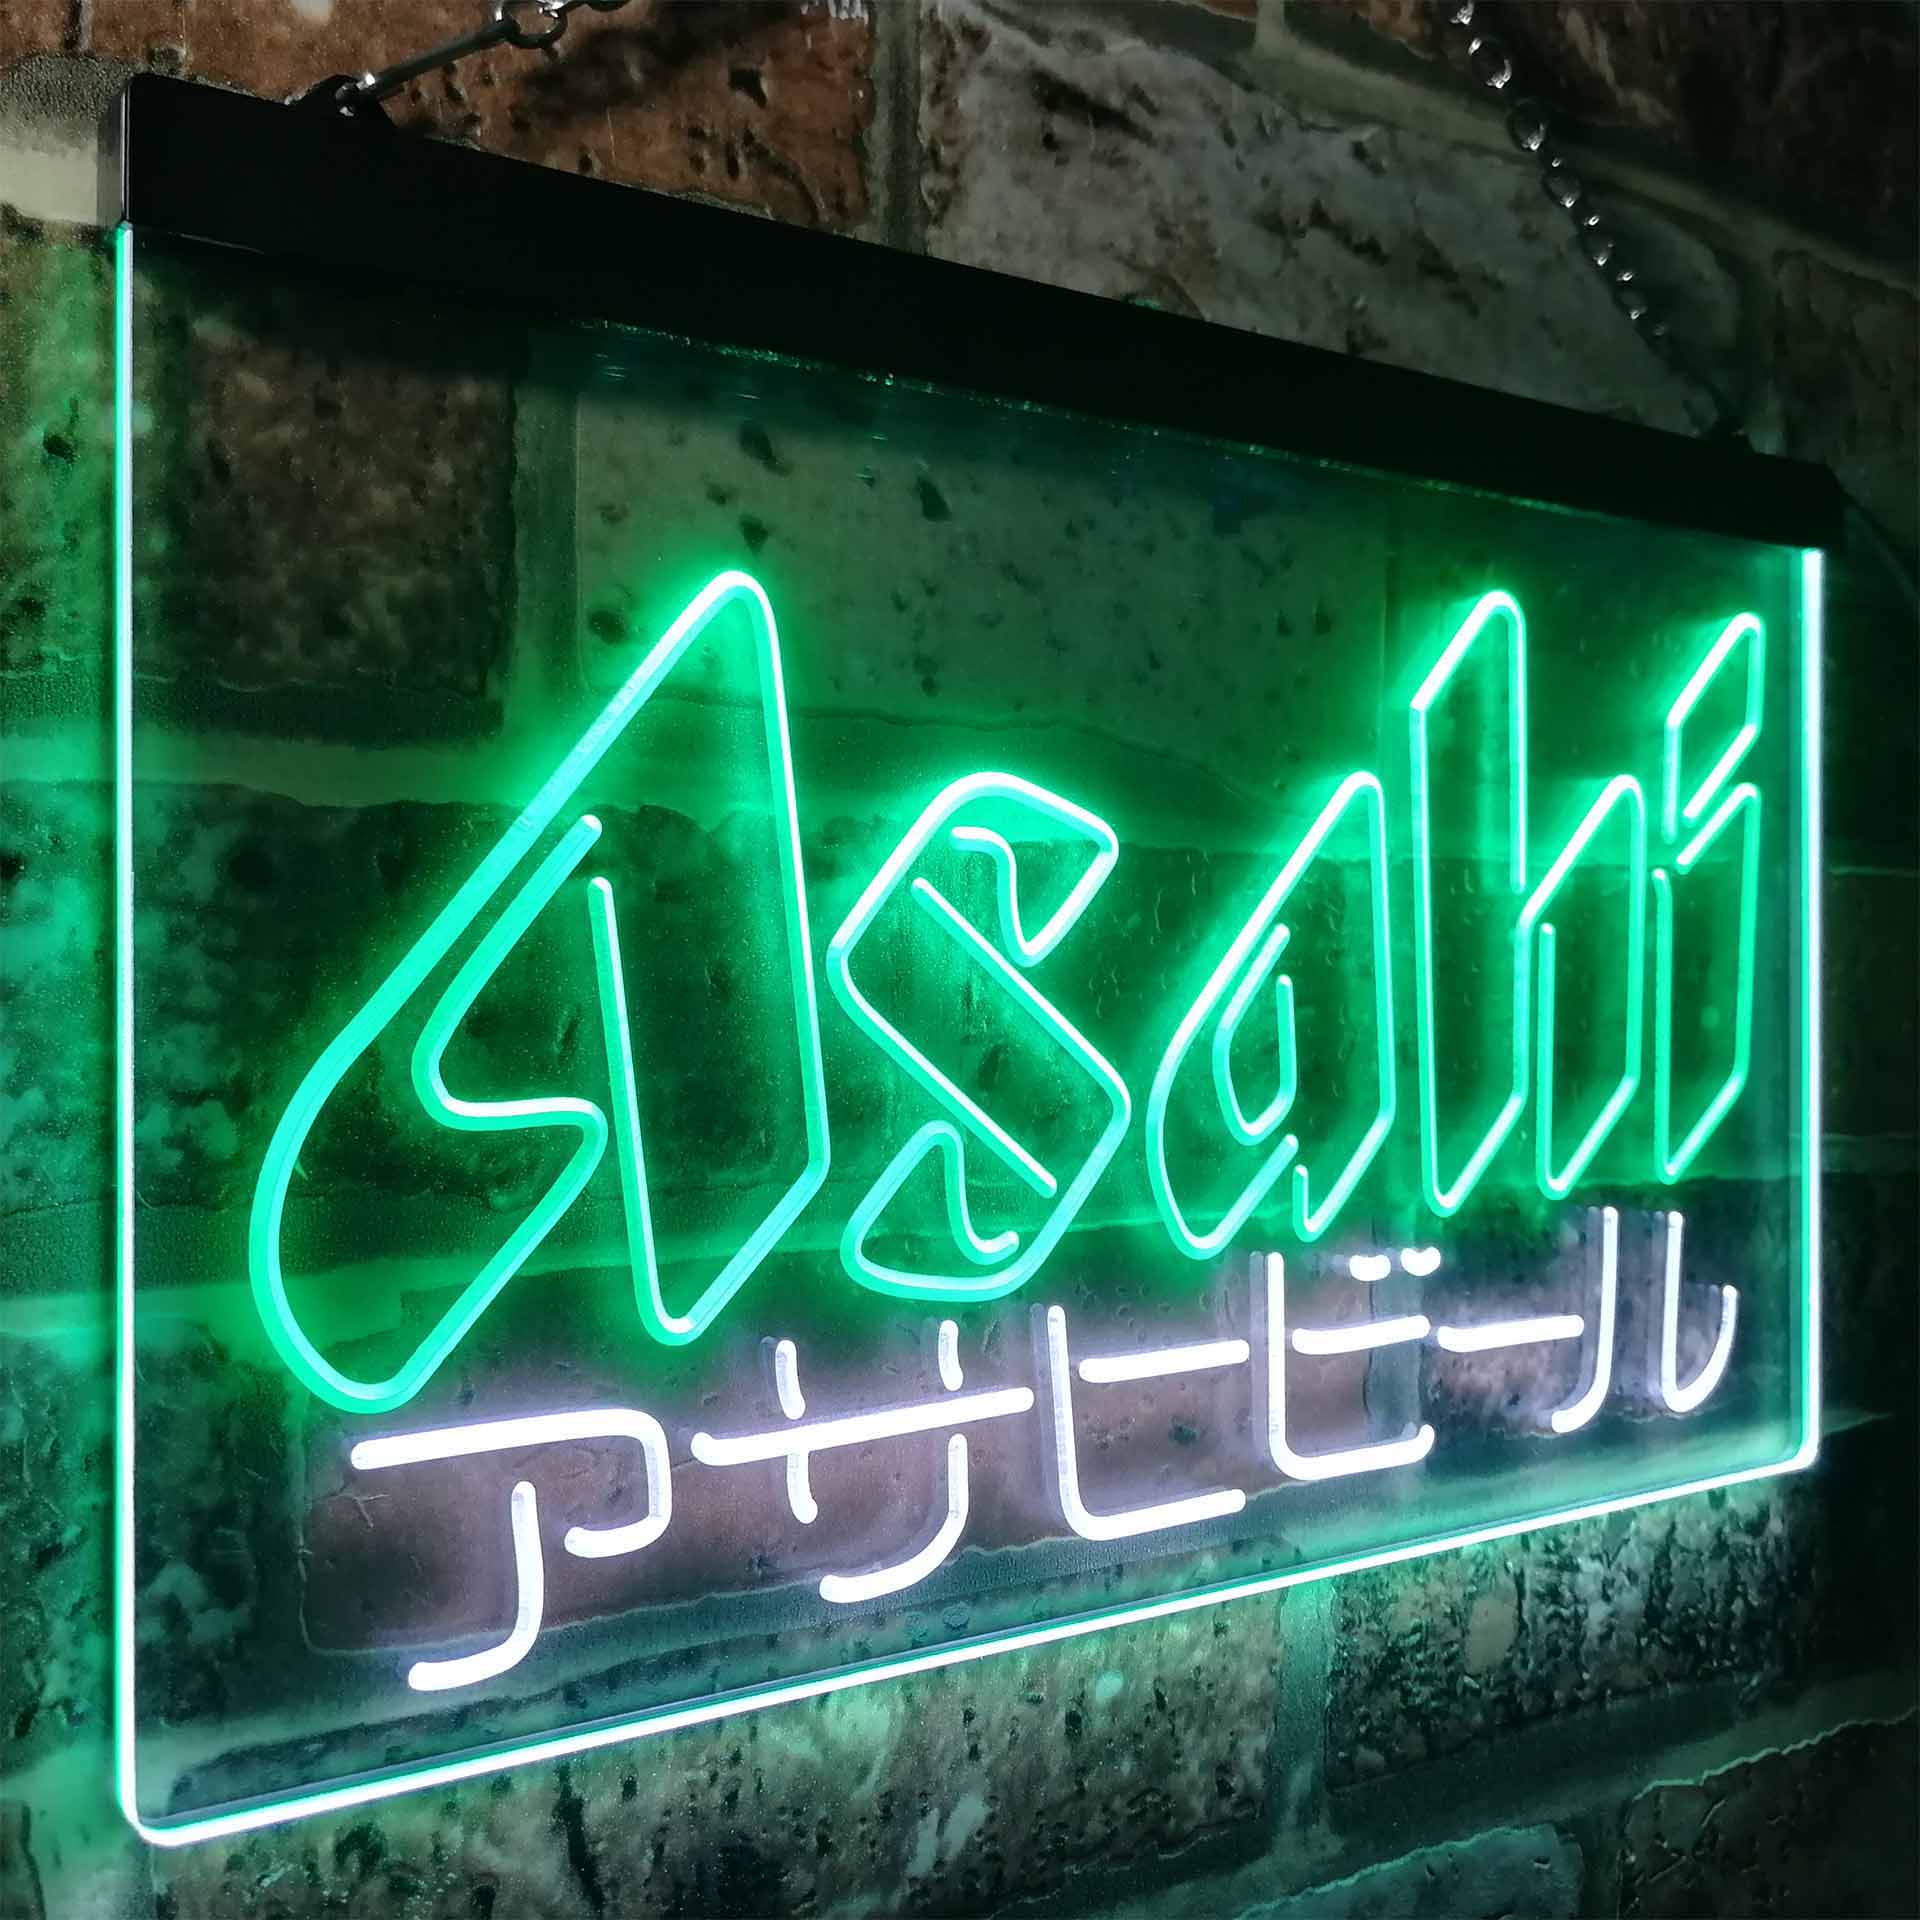 Asahi Japan Beer Bar LED Neon Sign